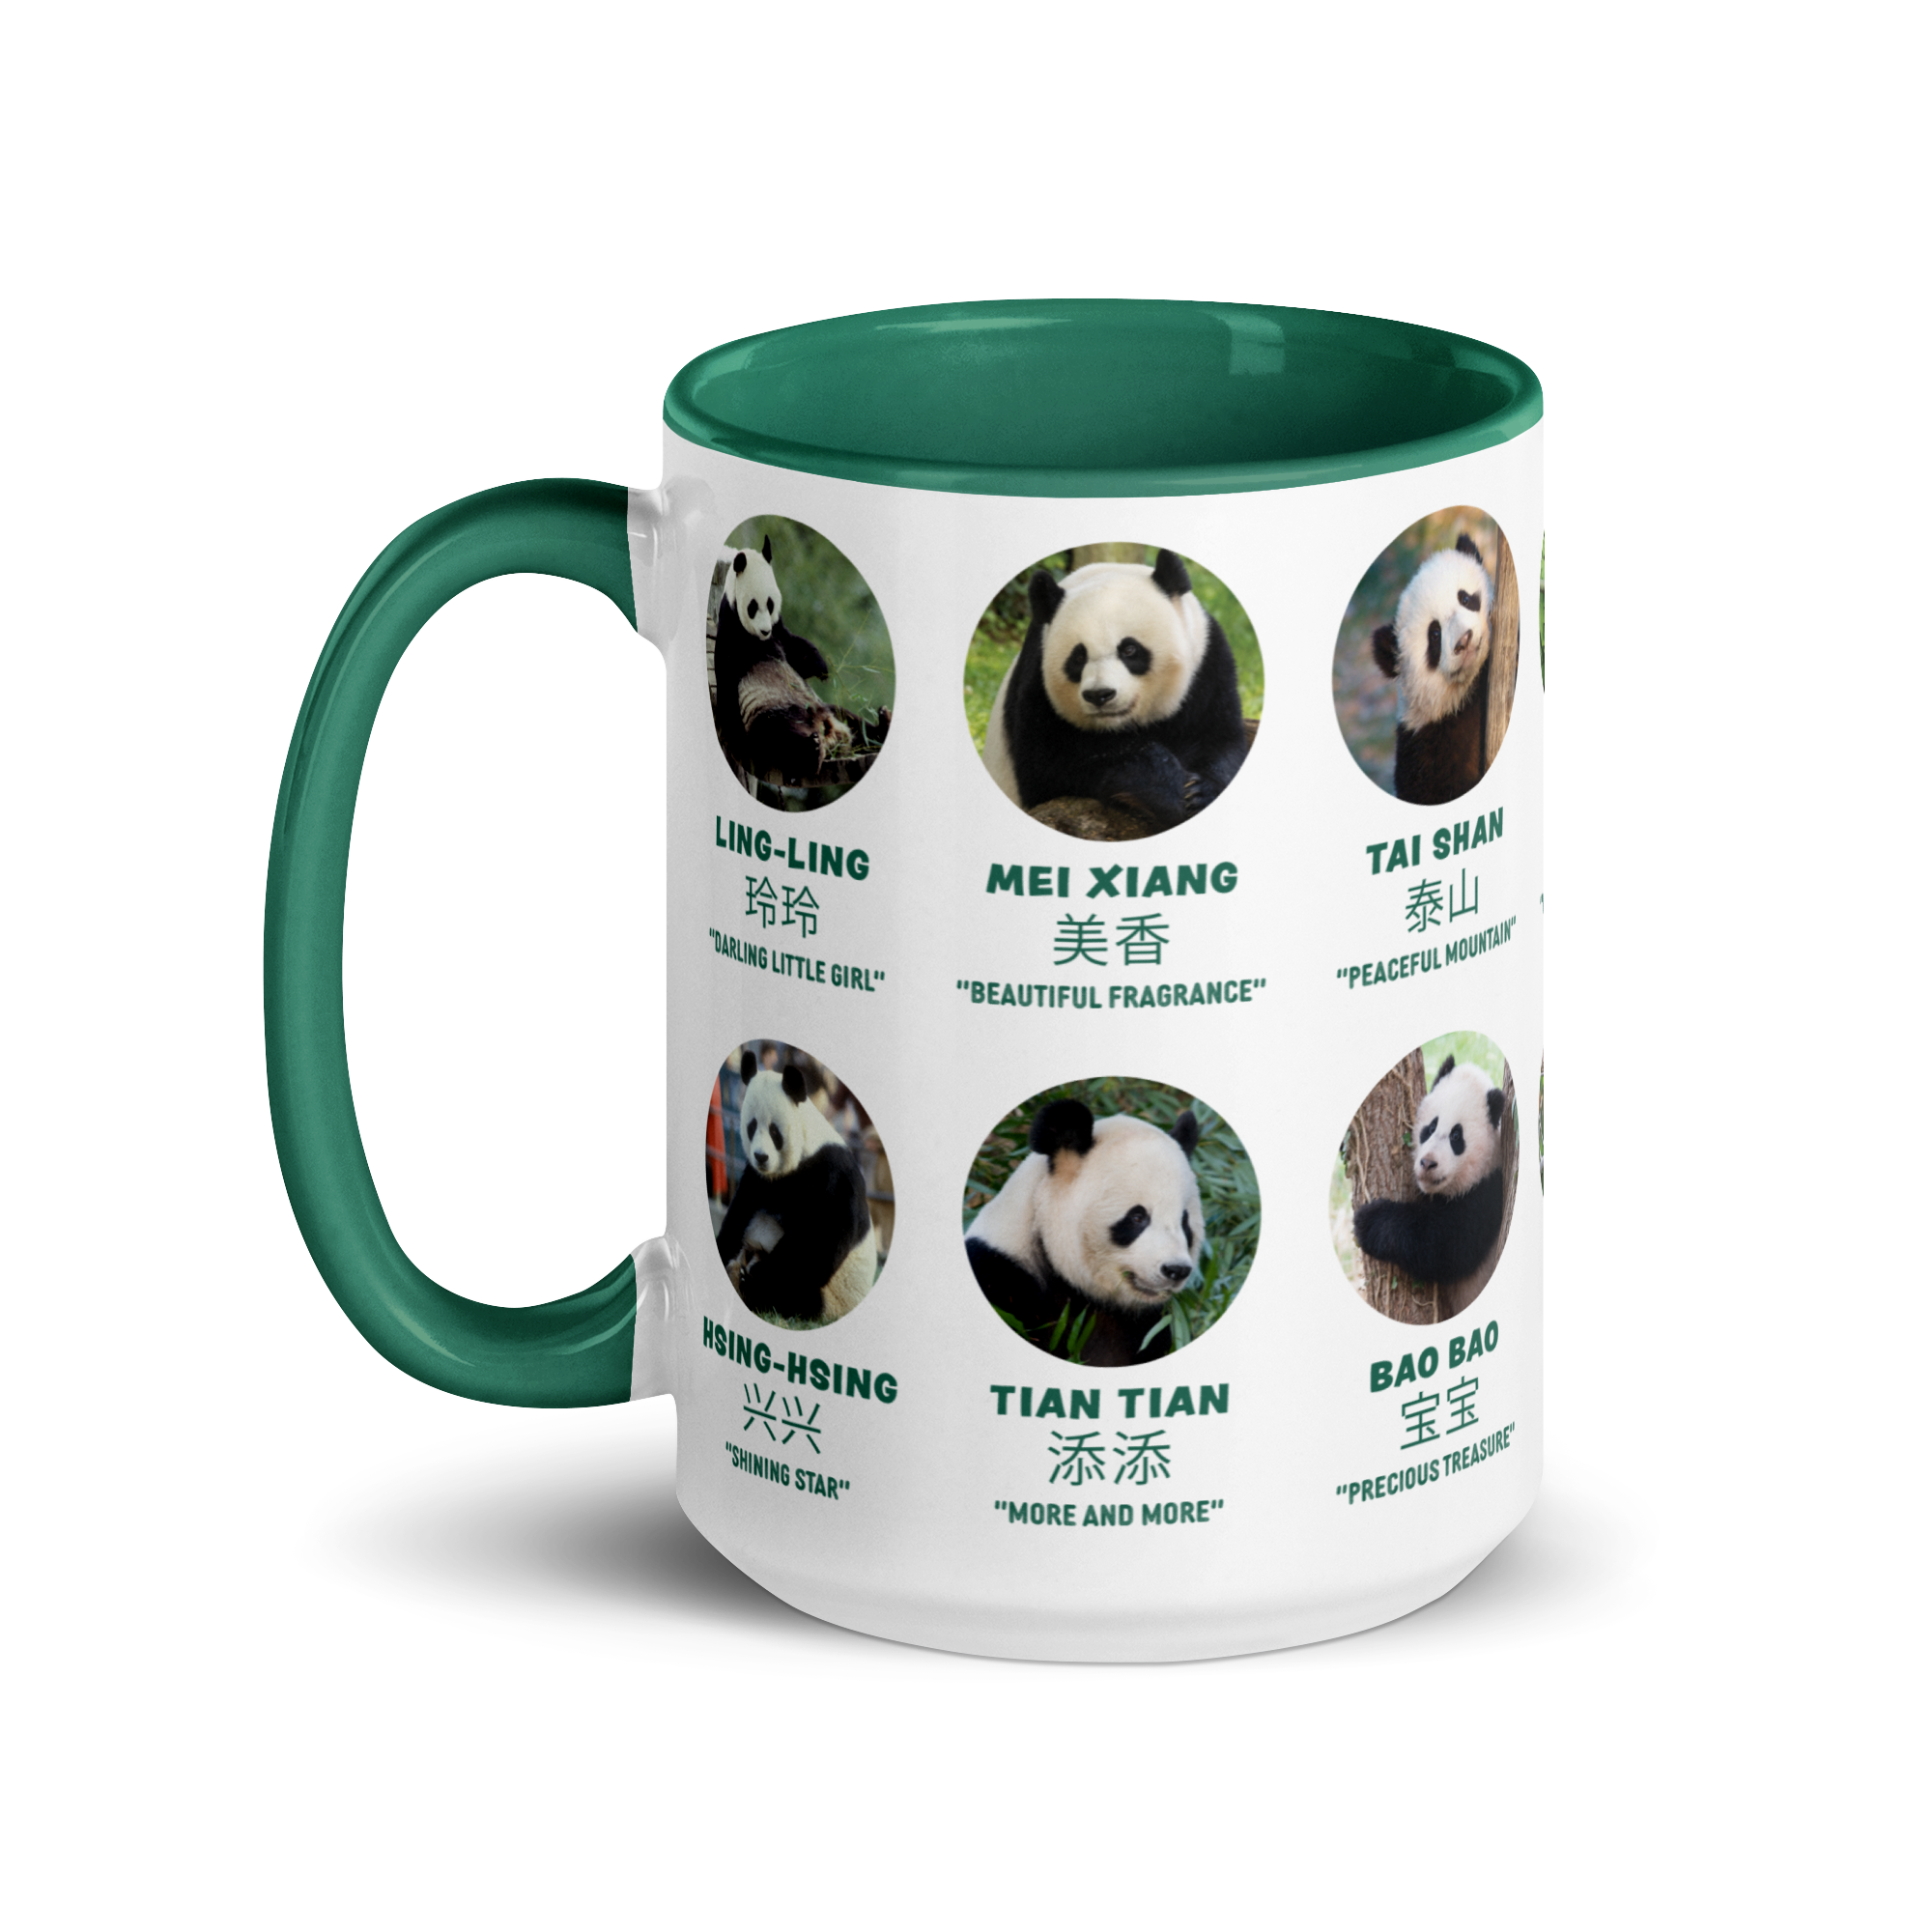 Panda tumbler  Unique items products, Tumbler cups, Mugs